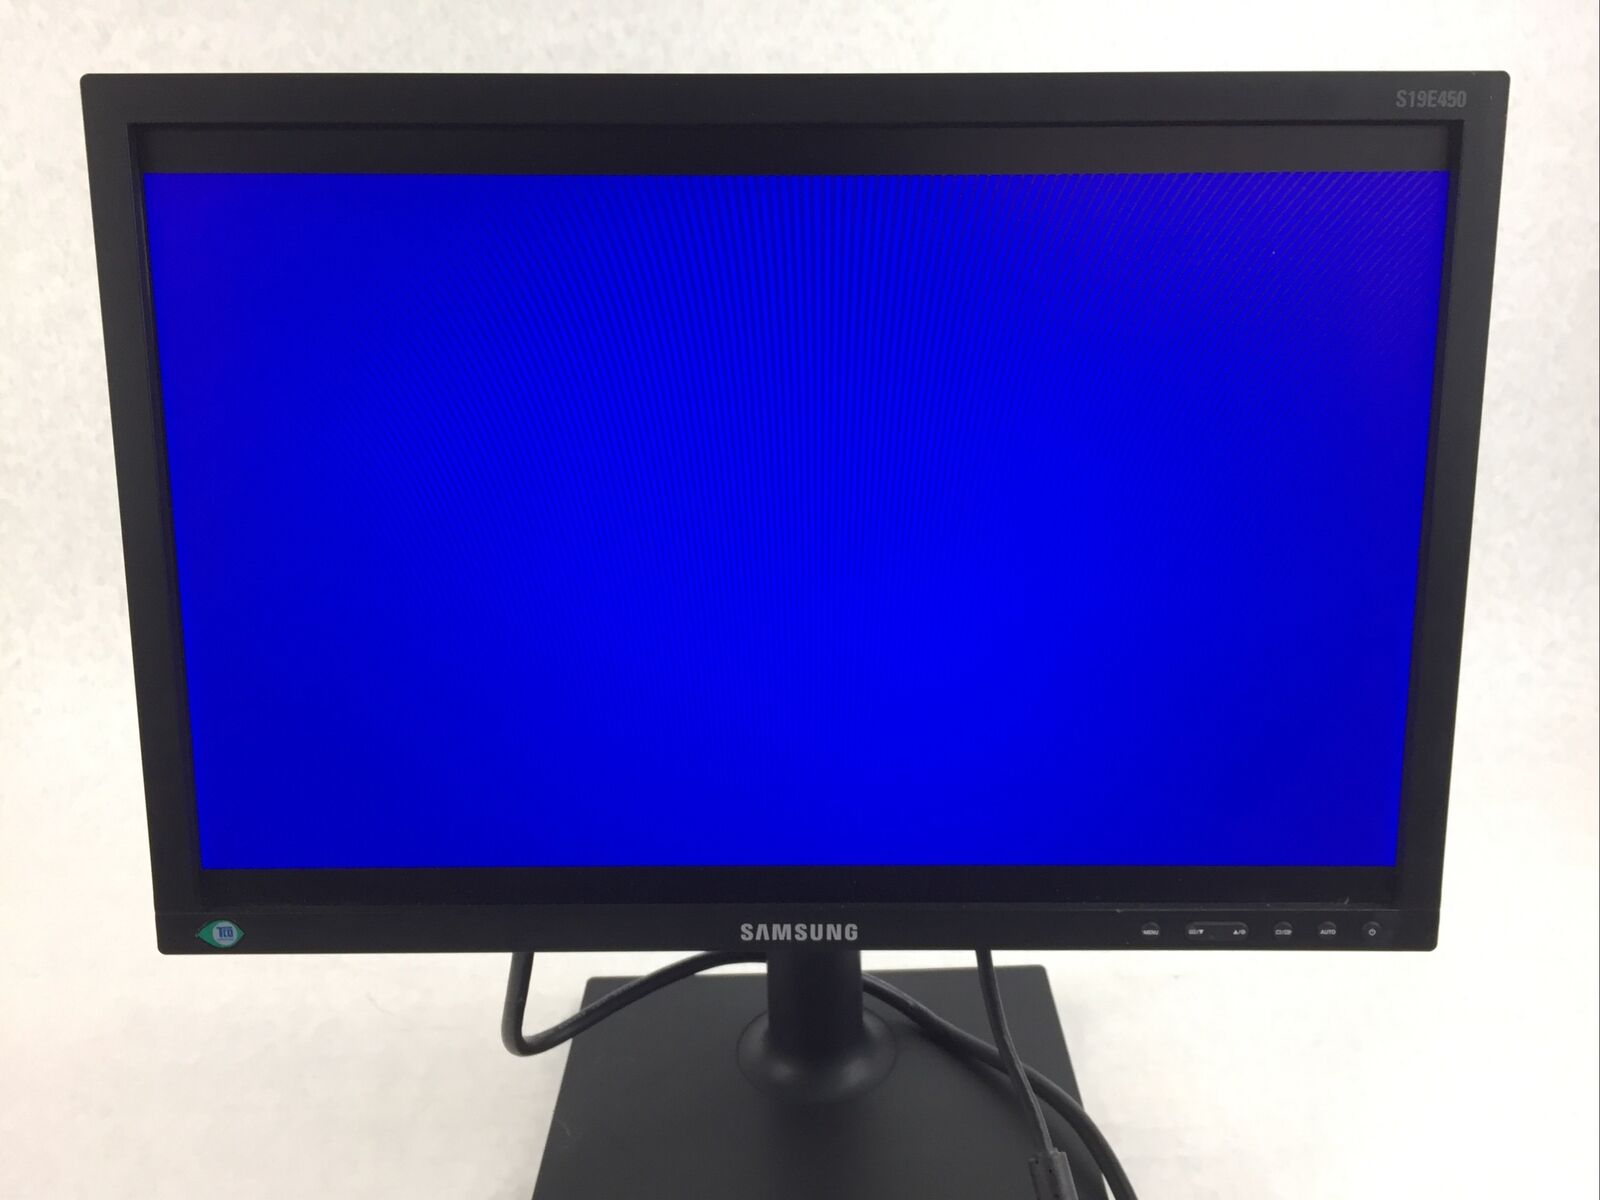 Samsung 19" SE450 Series LED Monitor S19E450BW 1440 x 900 pixels